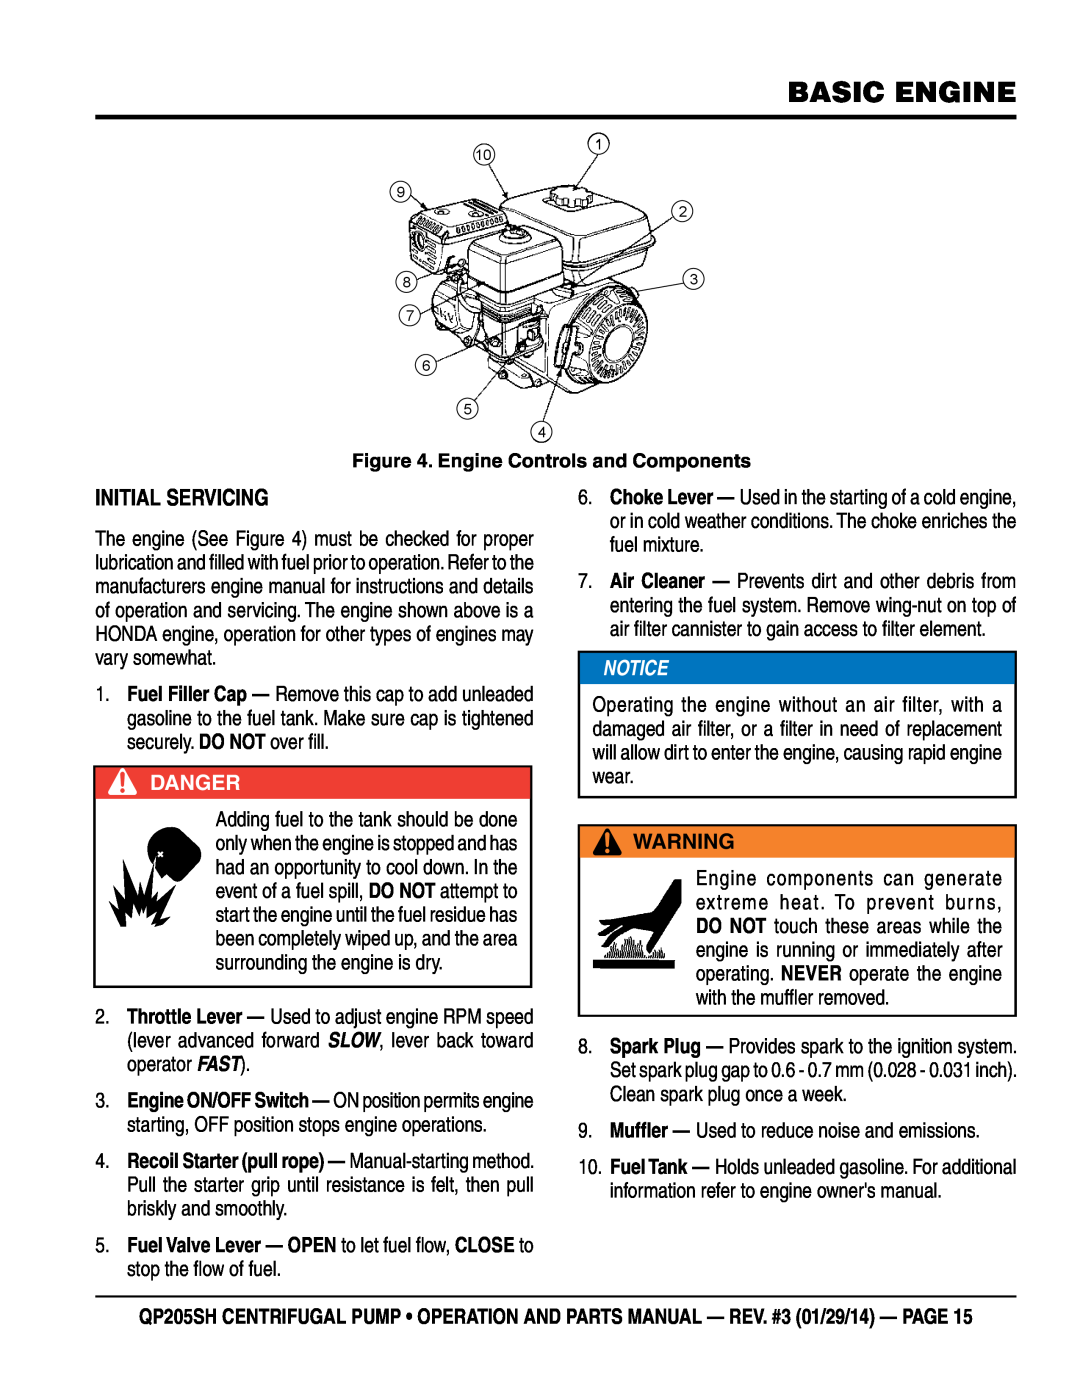 Honda Power Equipment QP205SH manual Basic Engine, Initial Servicing, Danger 